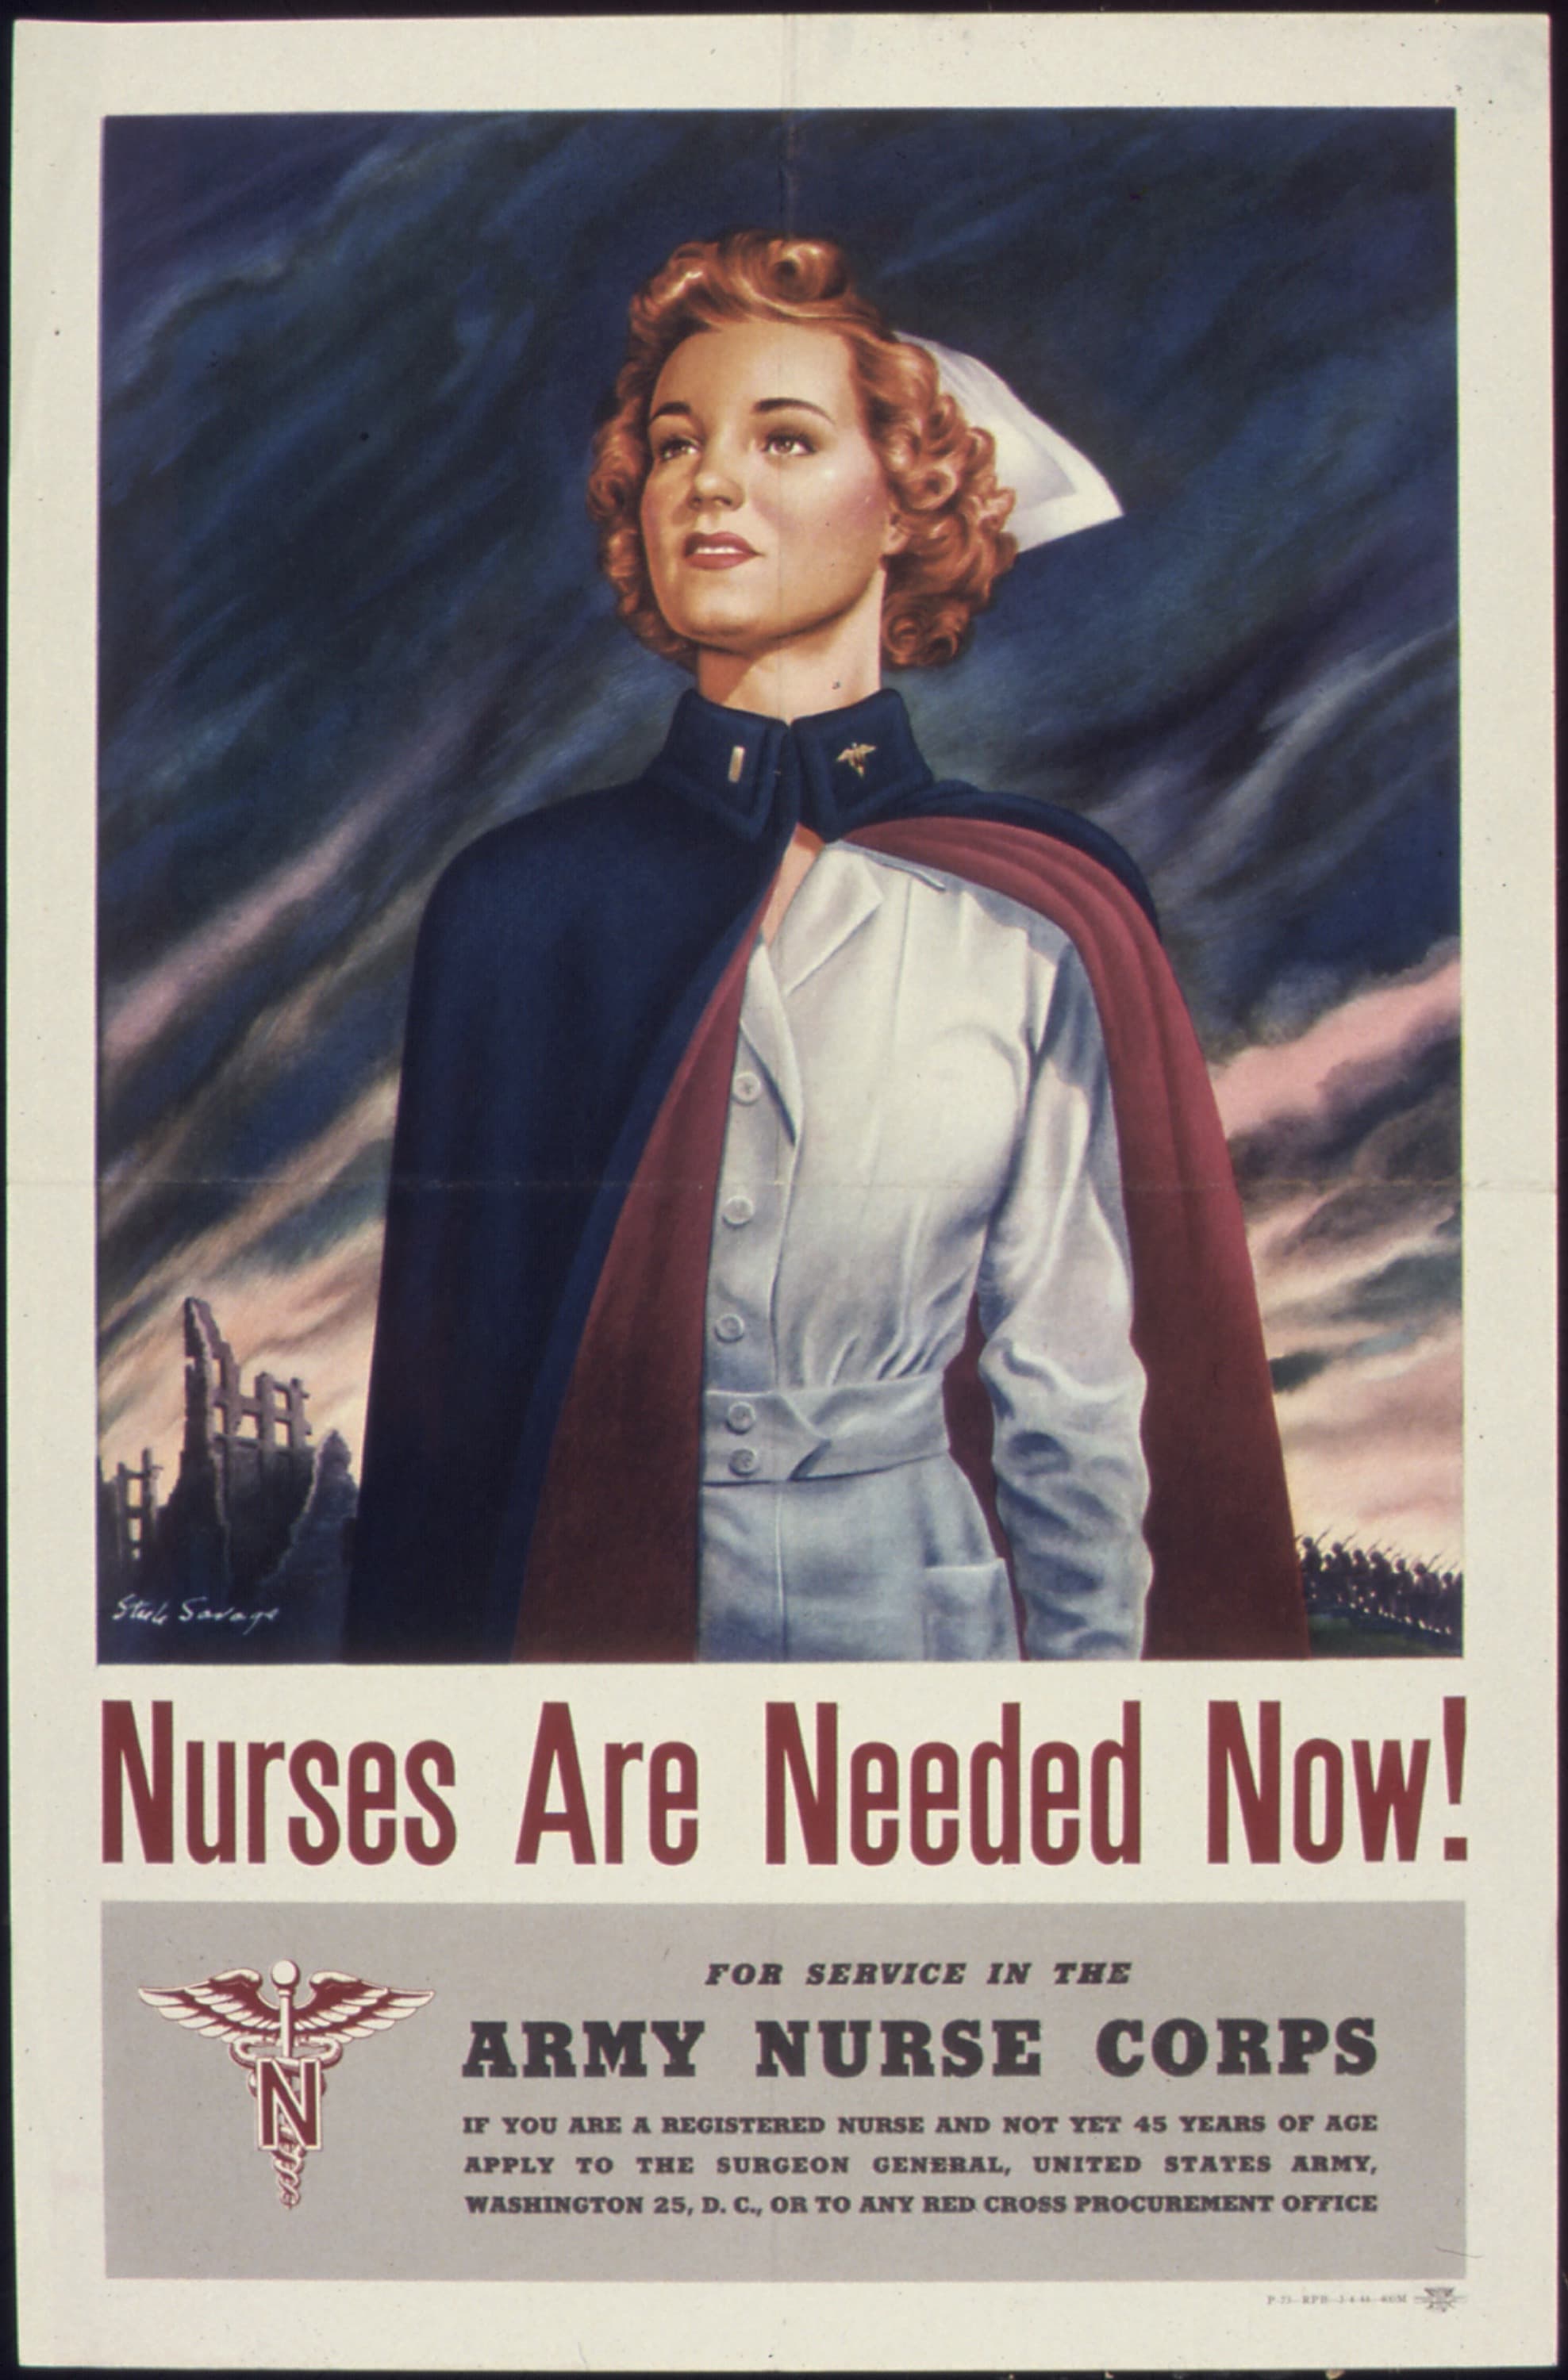 The Army Nurse